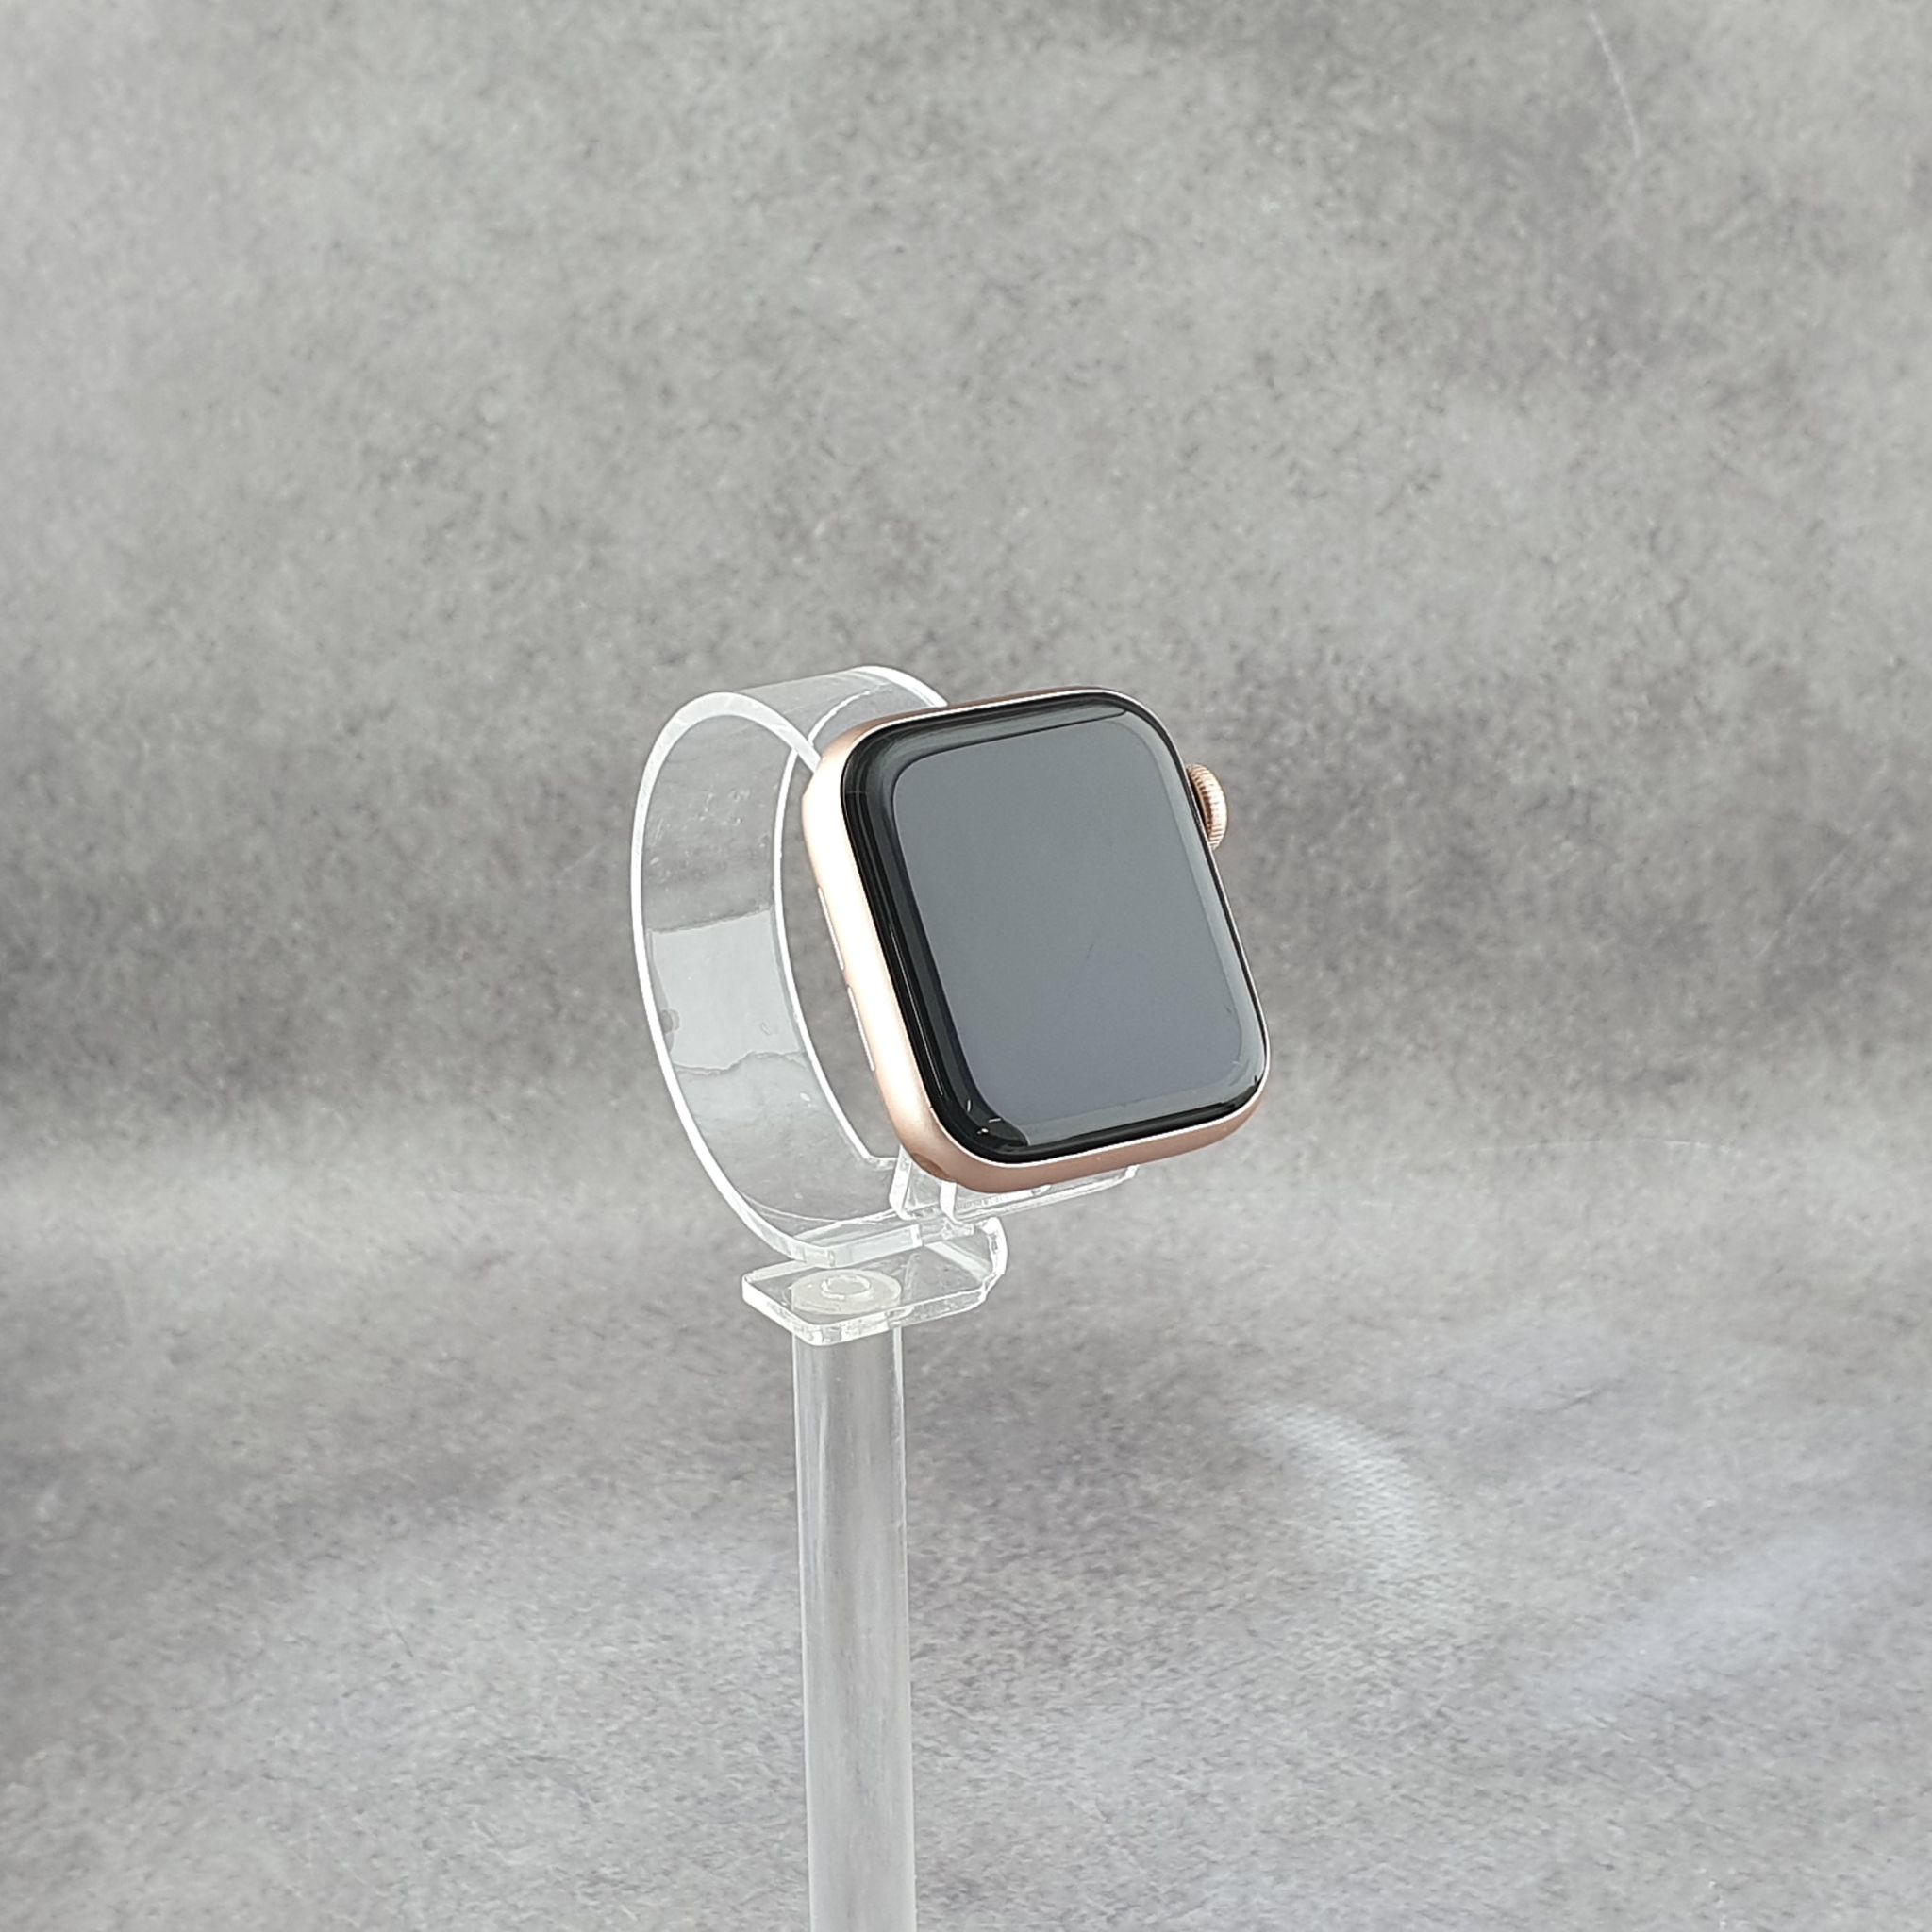 Apple Watch Series 5 - Фото